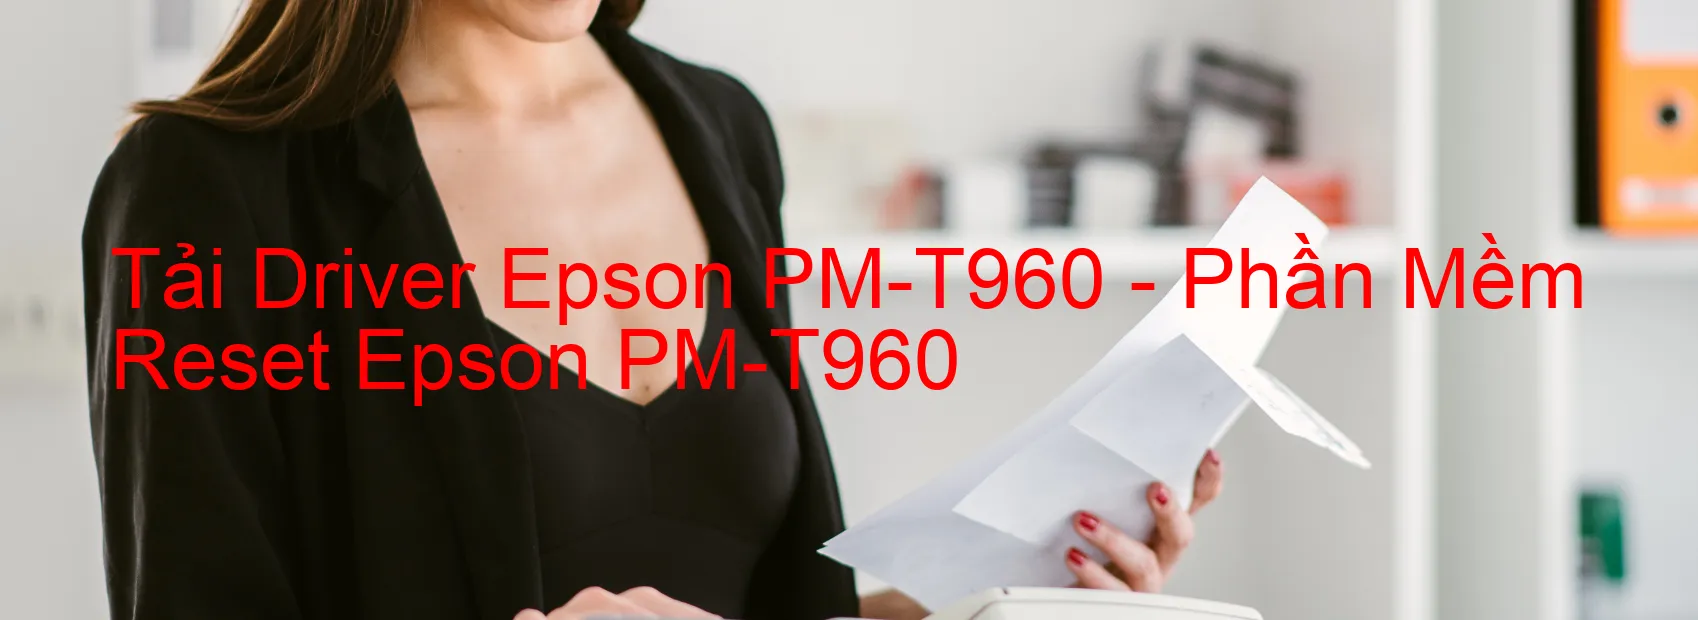 Driver Epson PM-T960, Phần Mềm Reset Epson PM-T960